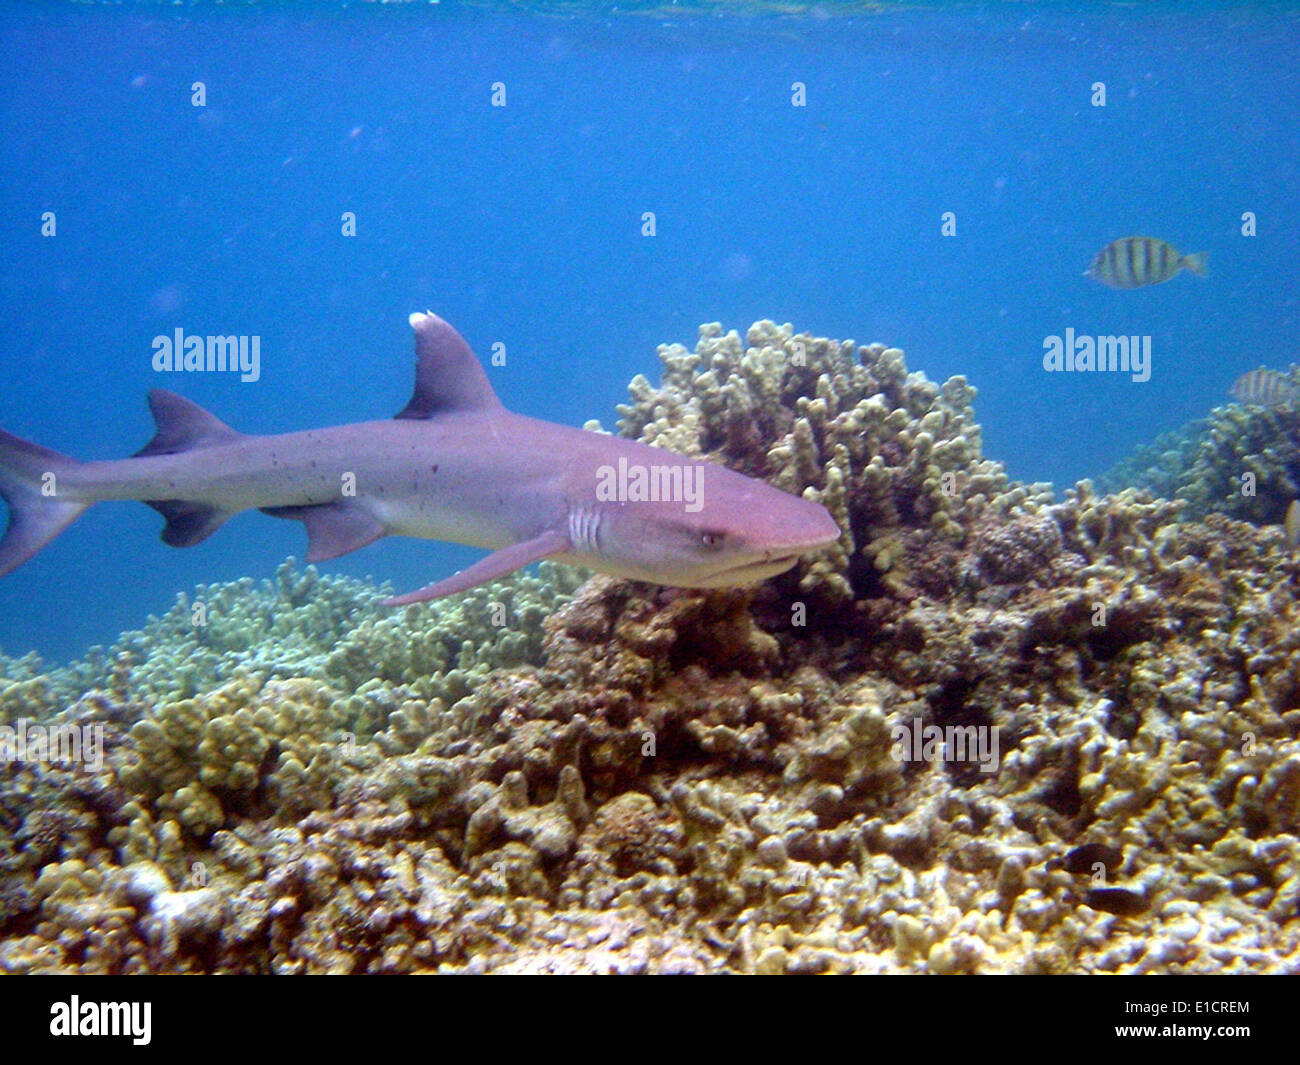 Large shark with remora swimming below. near Palau. Stock Photo